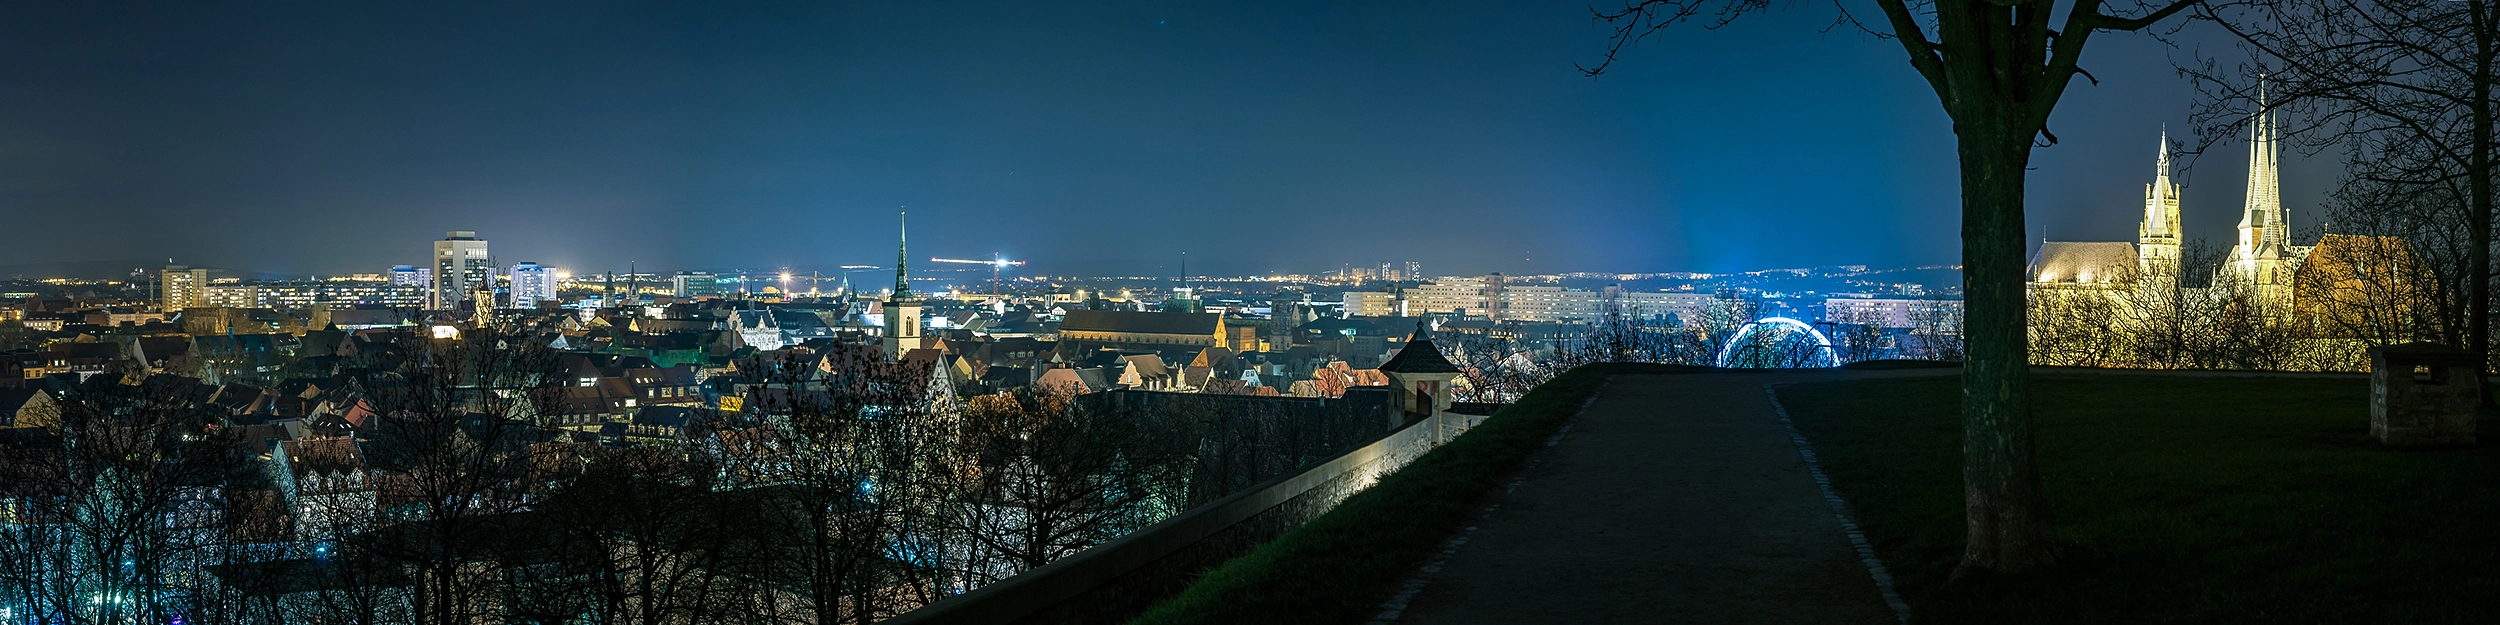 Landschaftsaufnahme bei Nacht, Erfurt vom Petersberg als Panoramaaufnahme